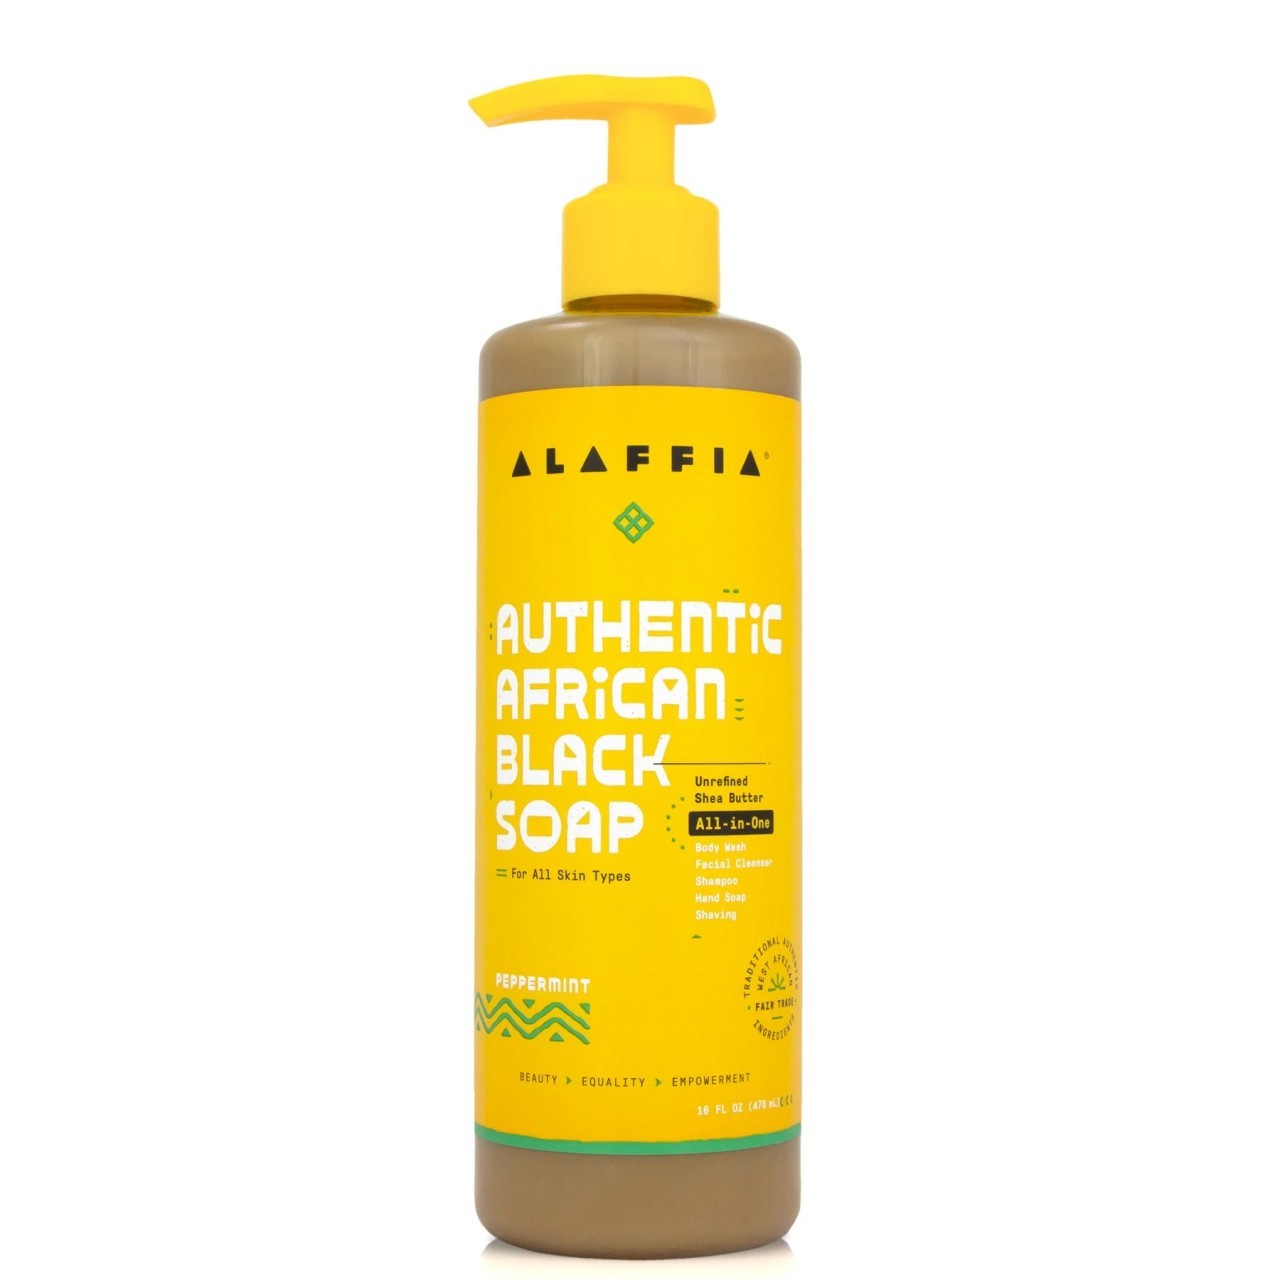 ALAFFIA BLACK SOAP PEPPERMINT 16oz